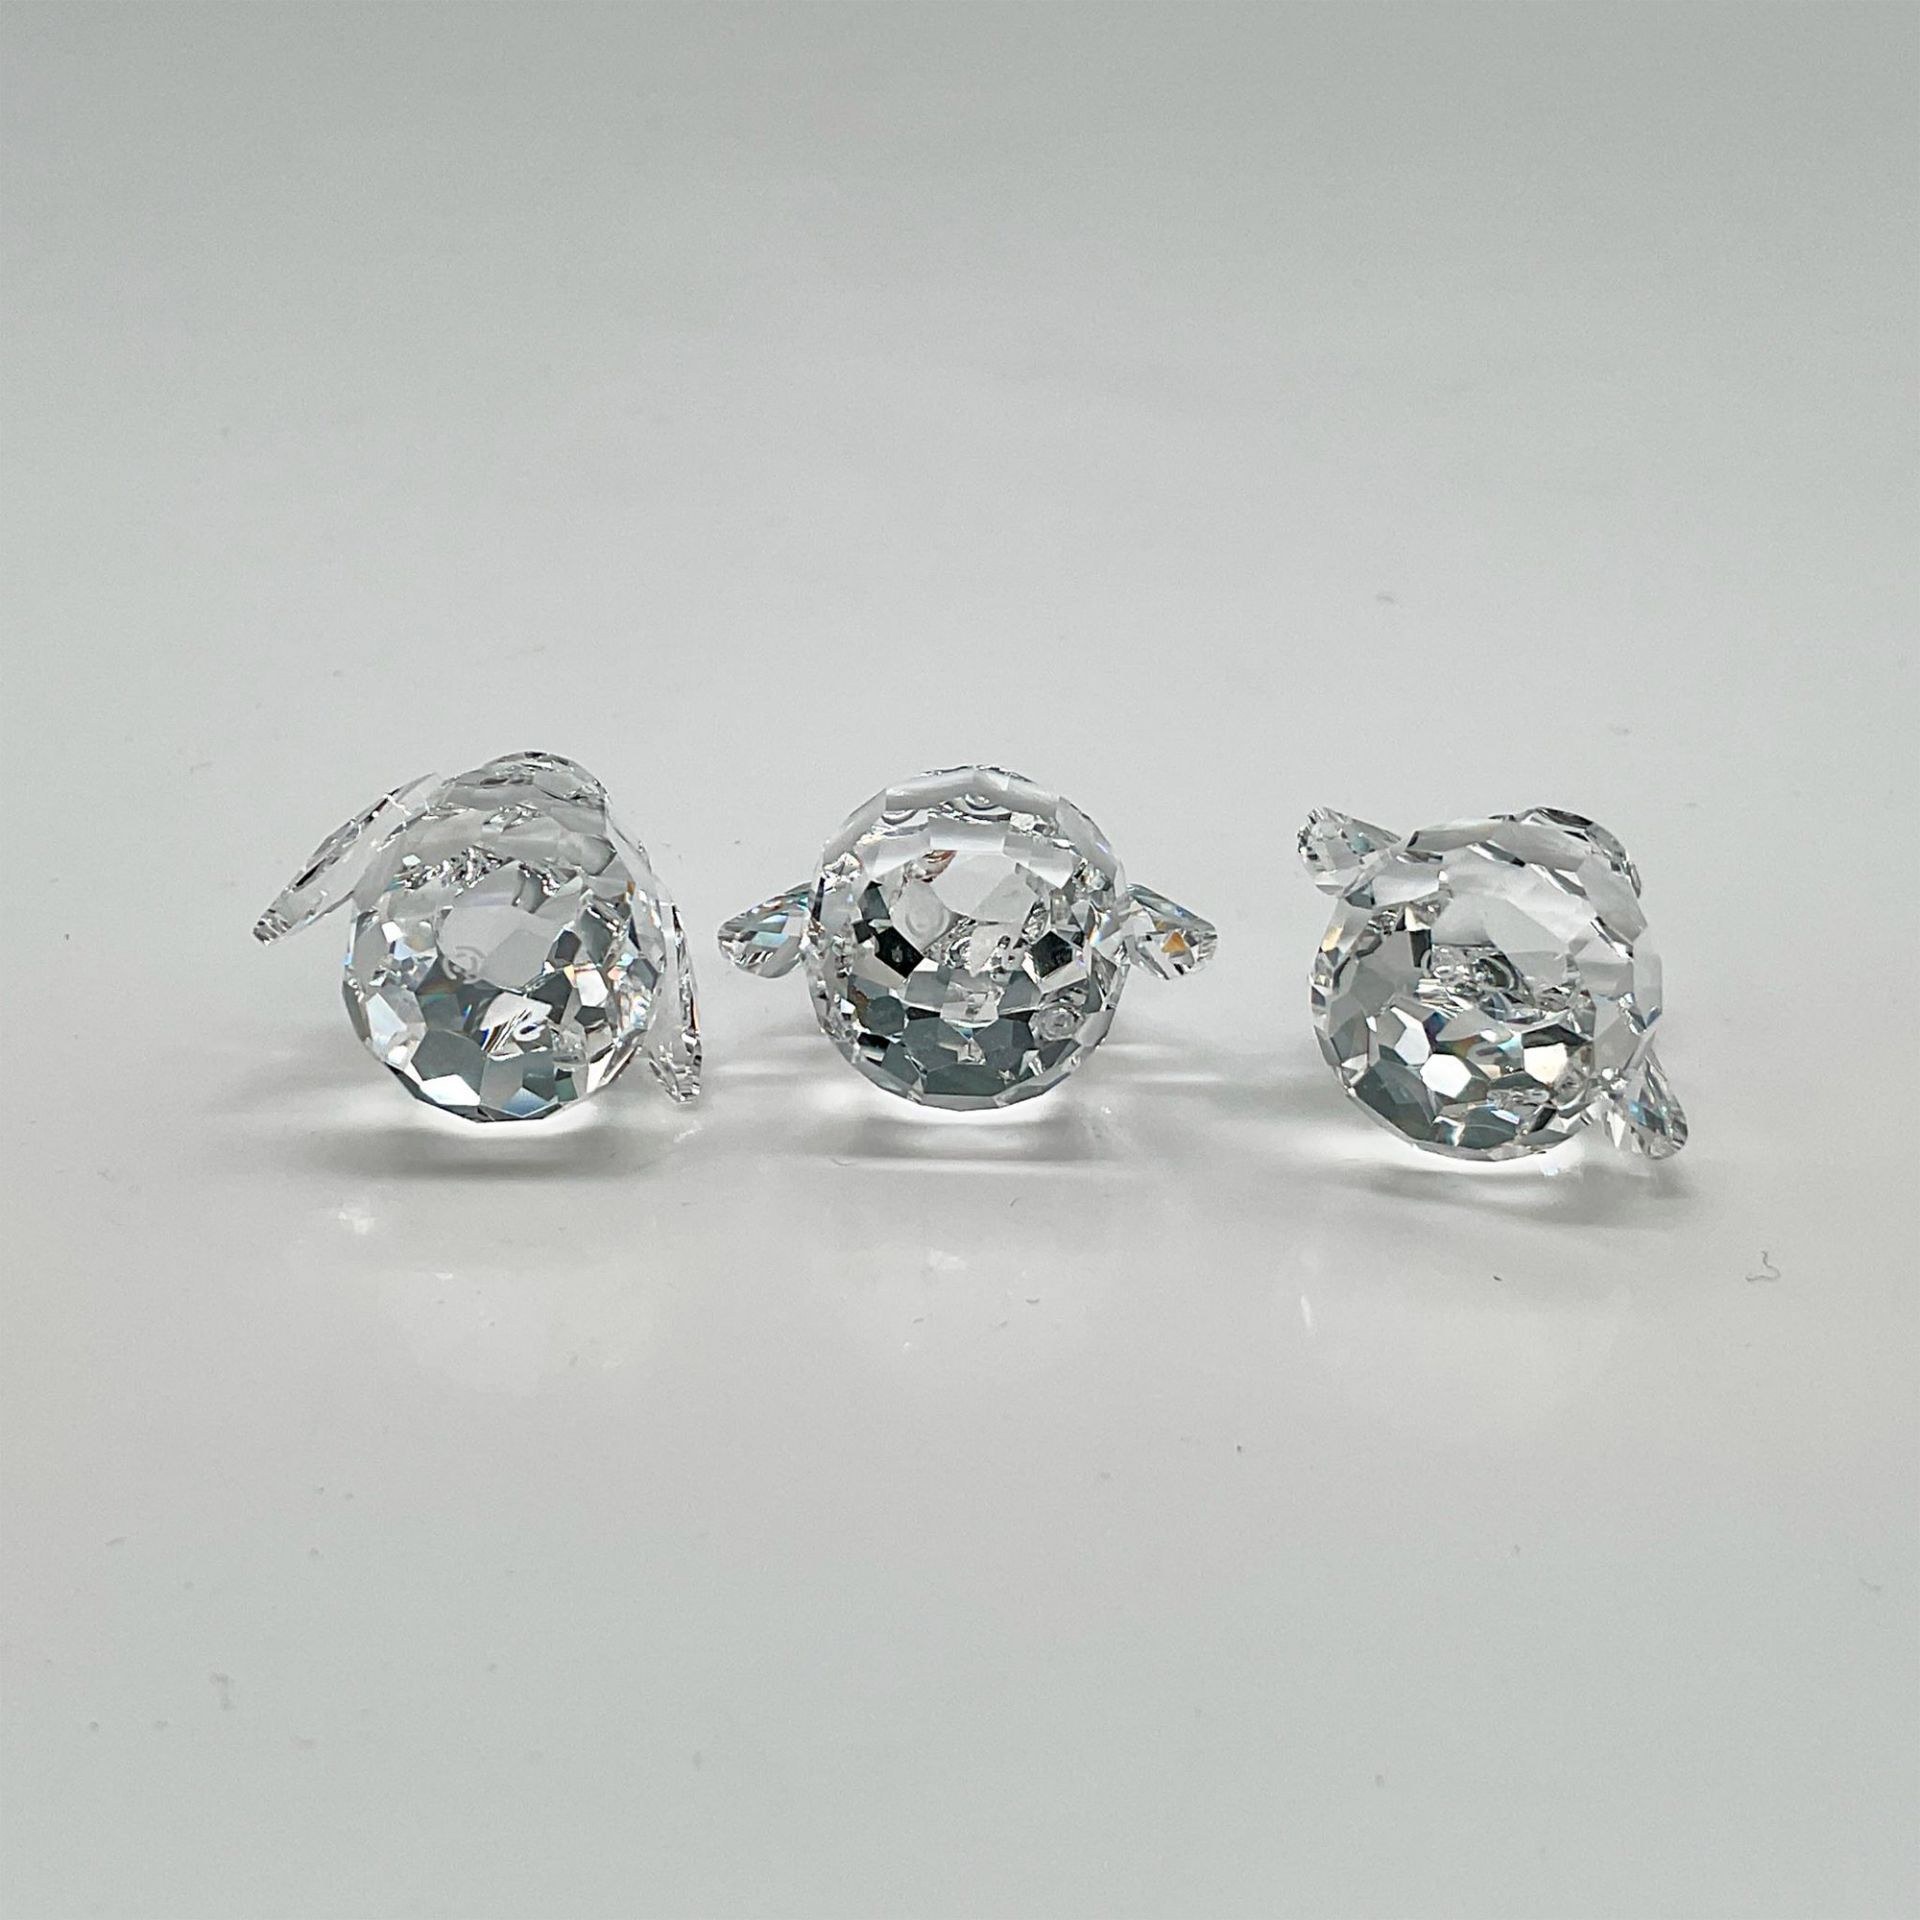 3pc Swarovski Crystal Figurines, Chick Penguins - Image 3 of 4